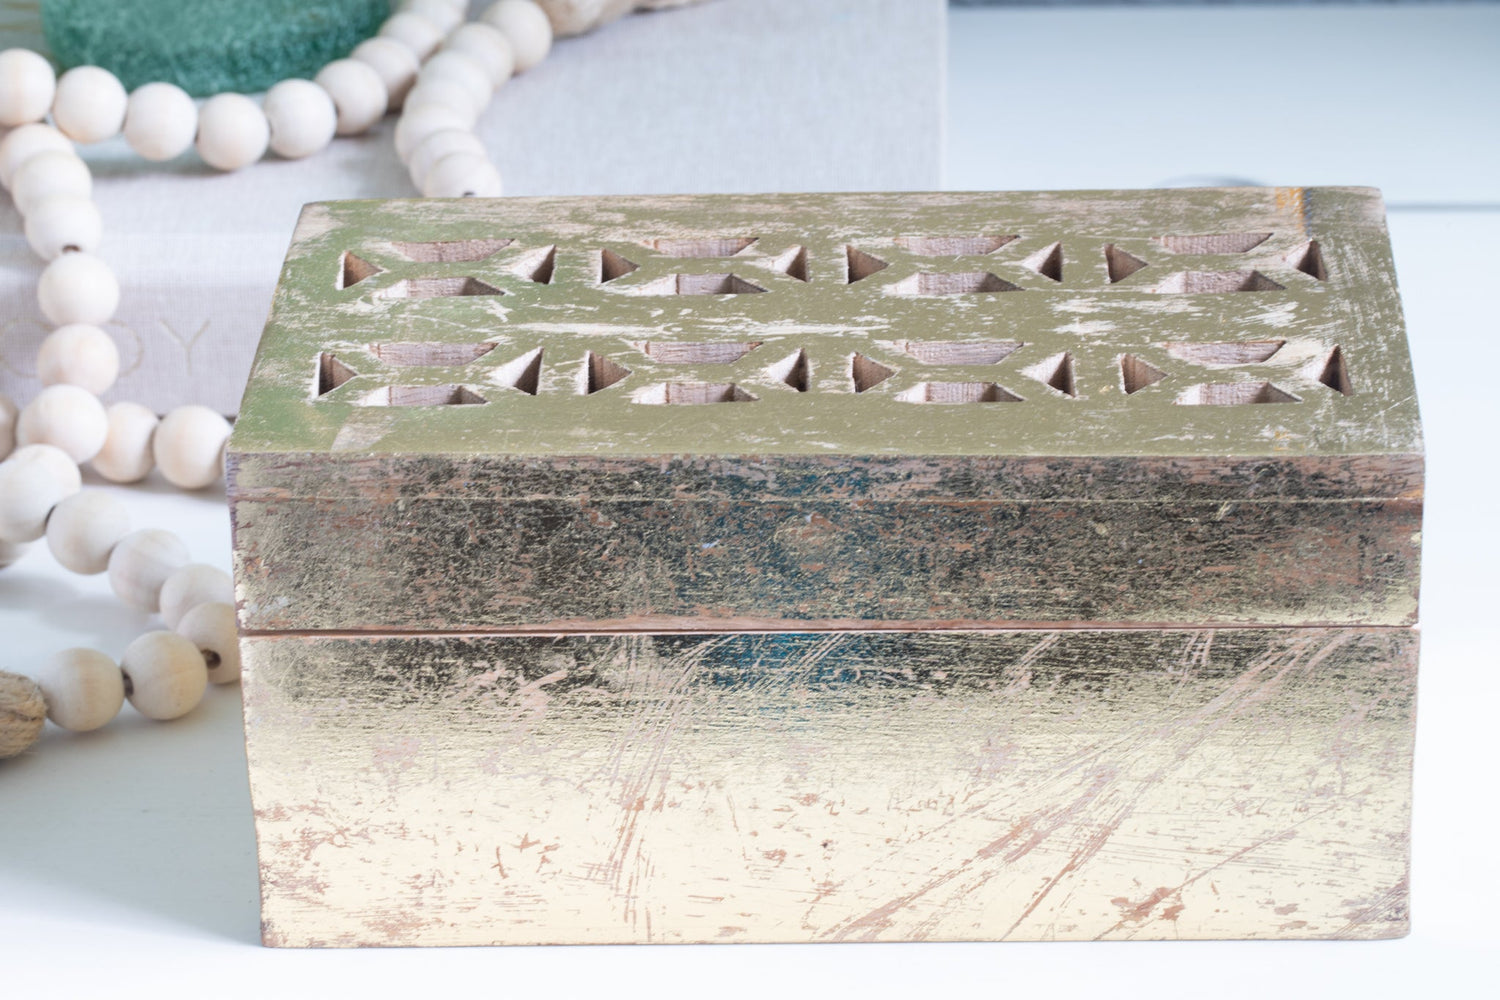 Hand-Carved Golden Treasure Box - Saltbox Sash